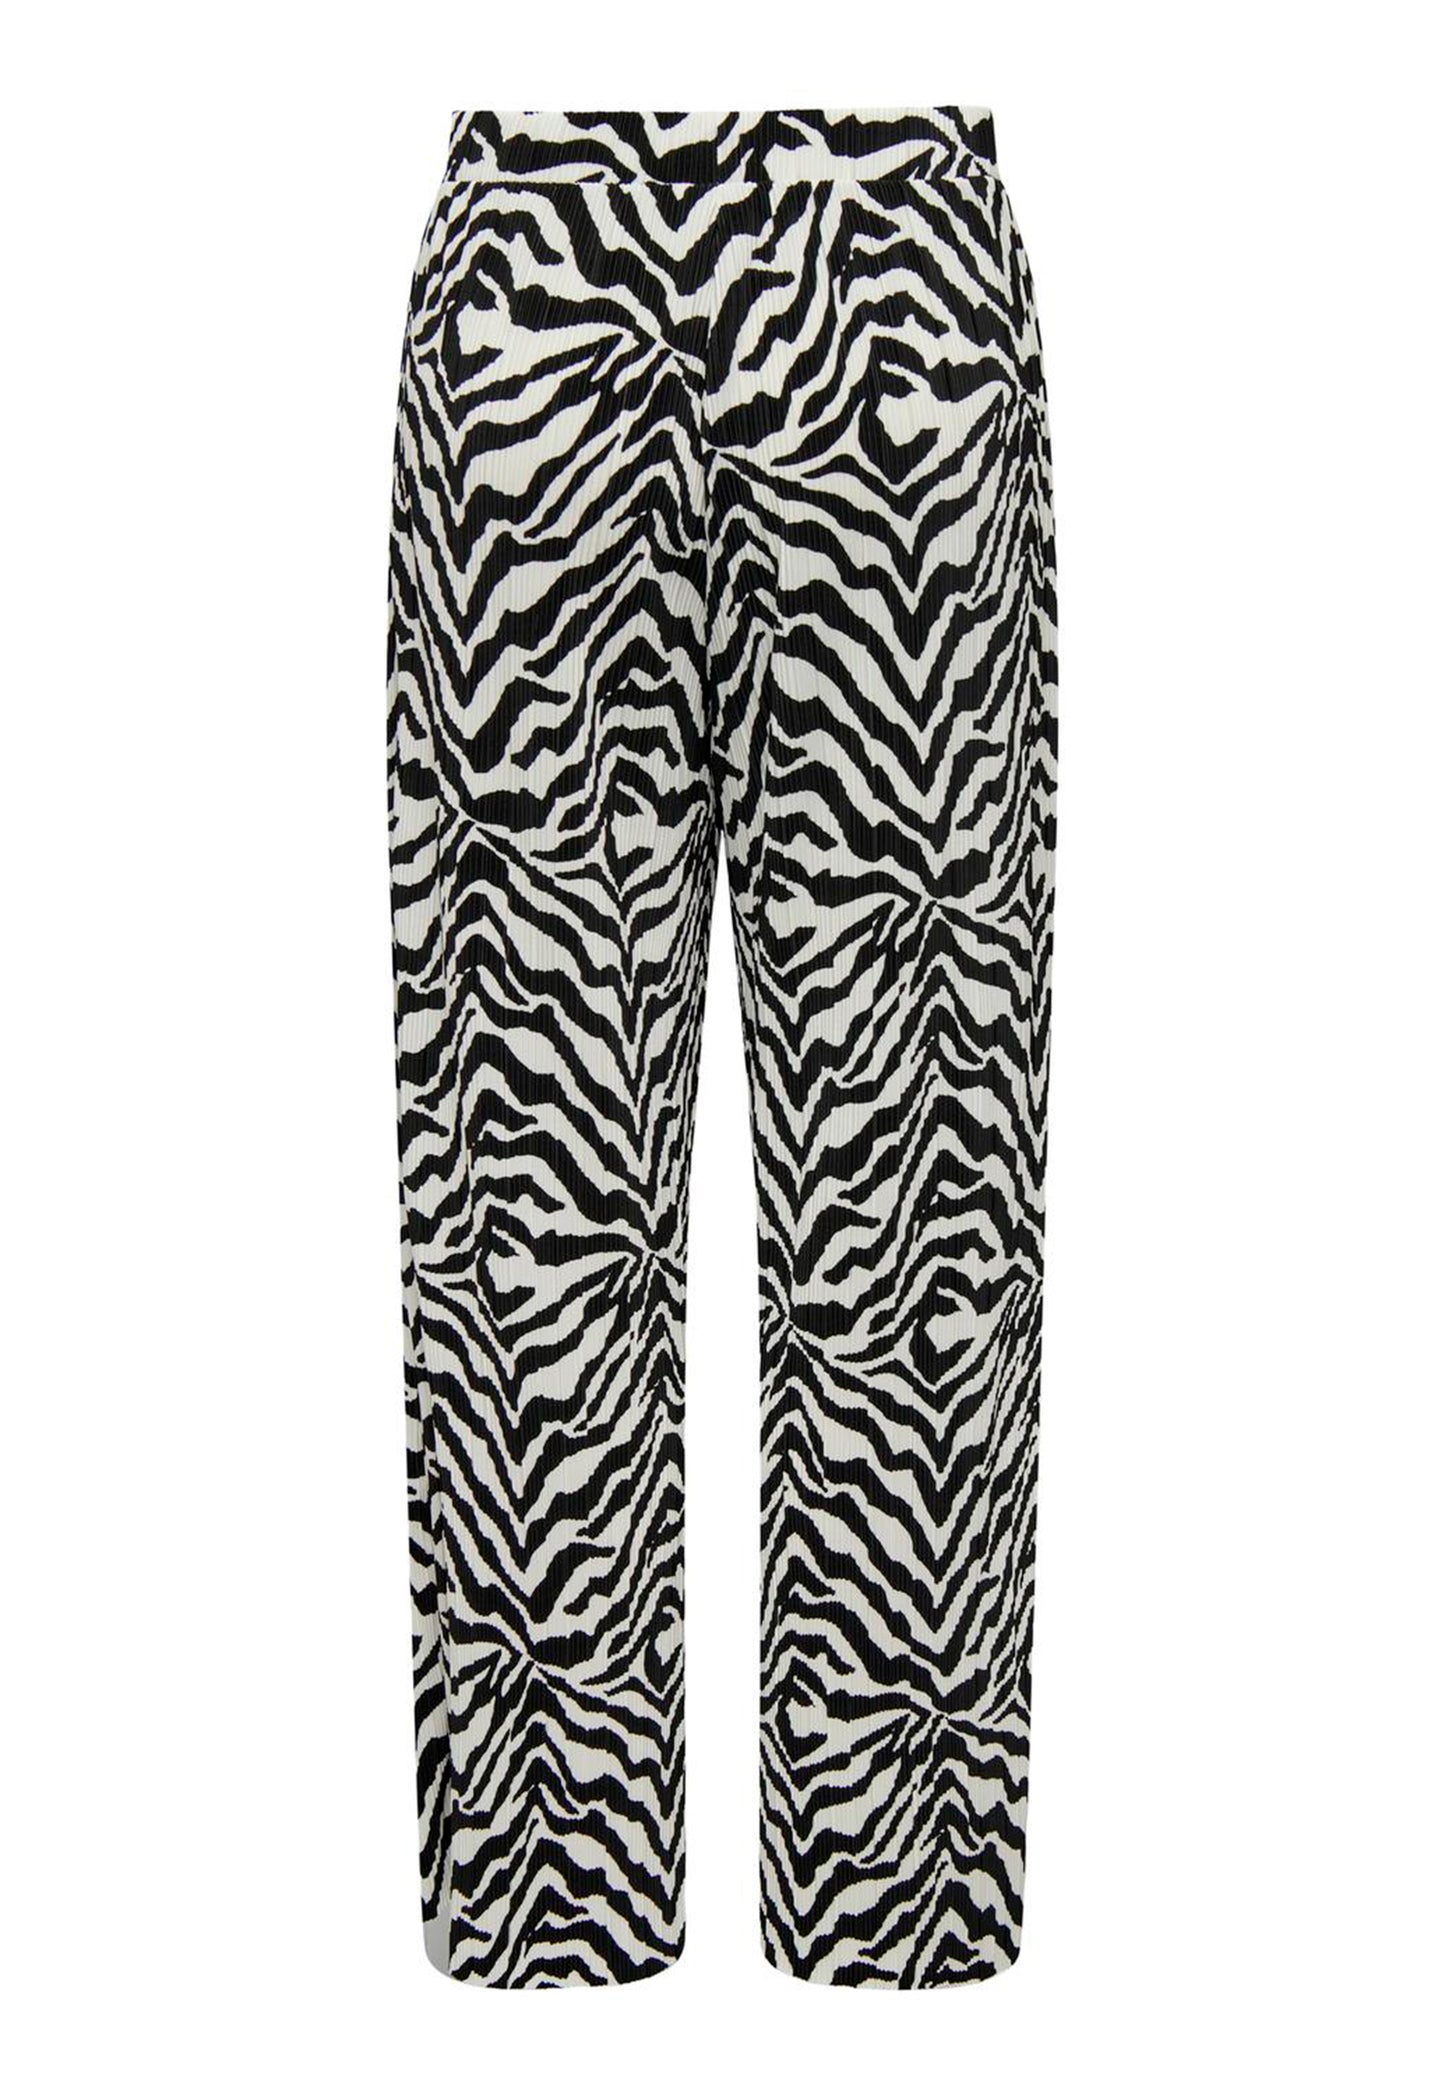 
                  
                    JDY Bravo Zebra Print Plisse Avslappnade byxor med vida ben i svart och kräm - One Nation Clothing
                  
                